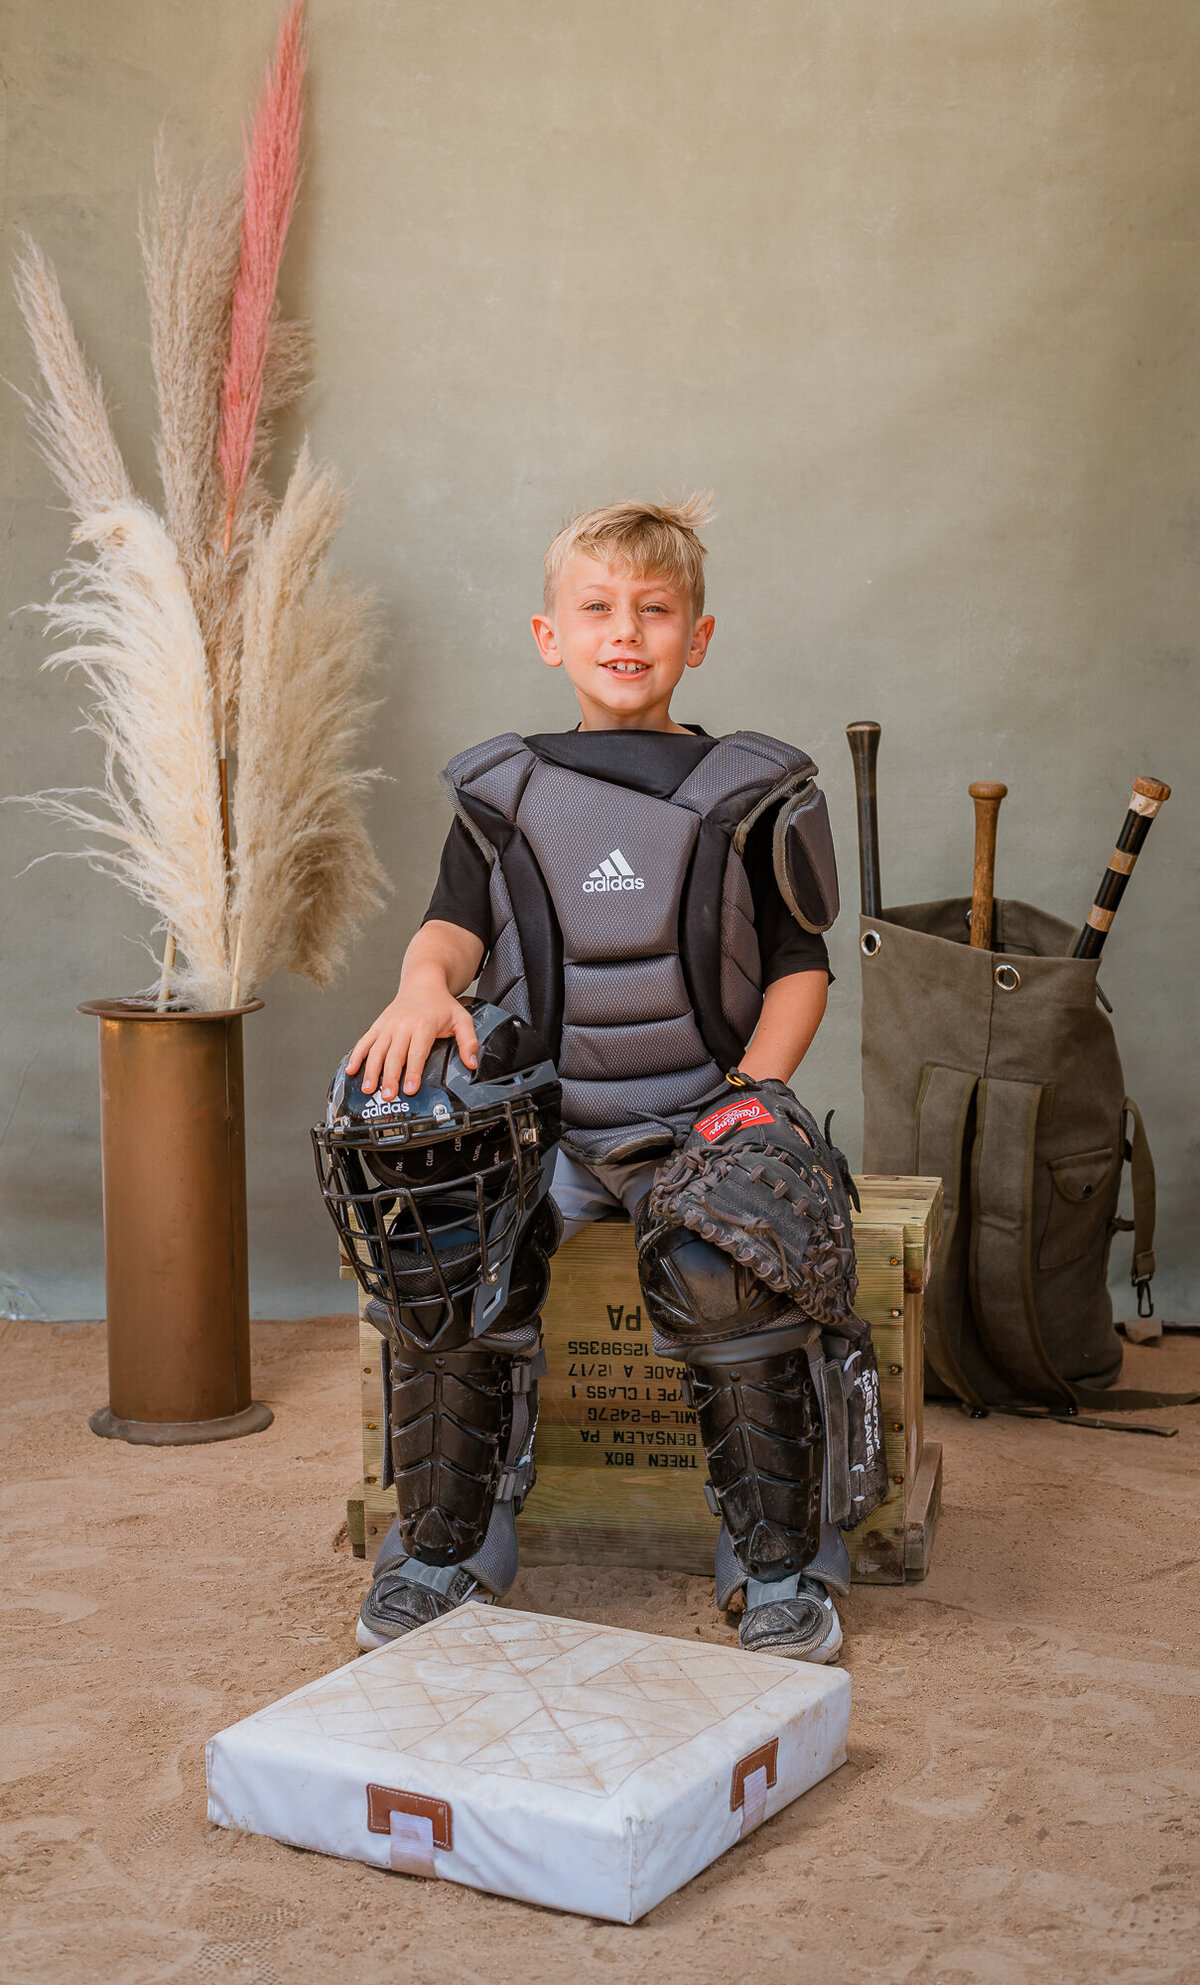 Poway American Little League Portraits 2 | Corey Kennedy Photography